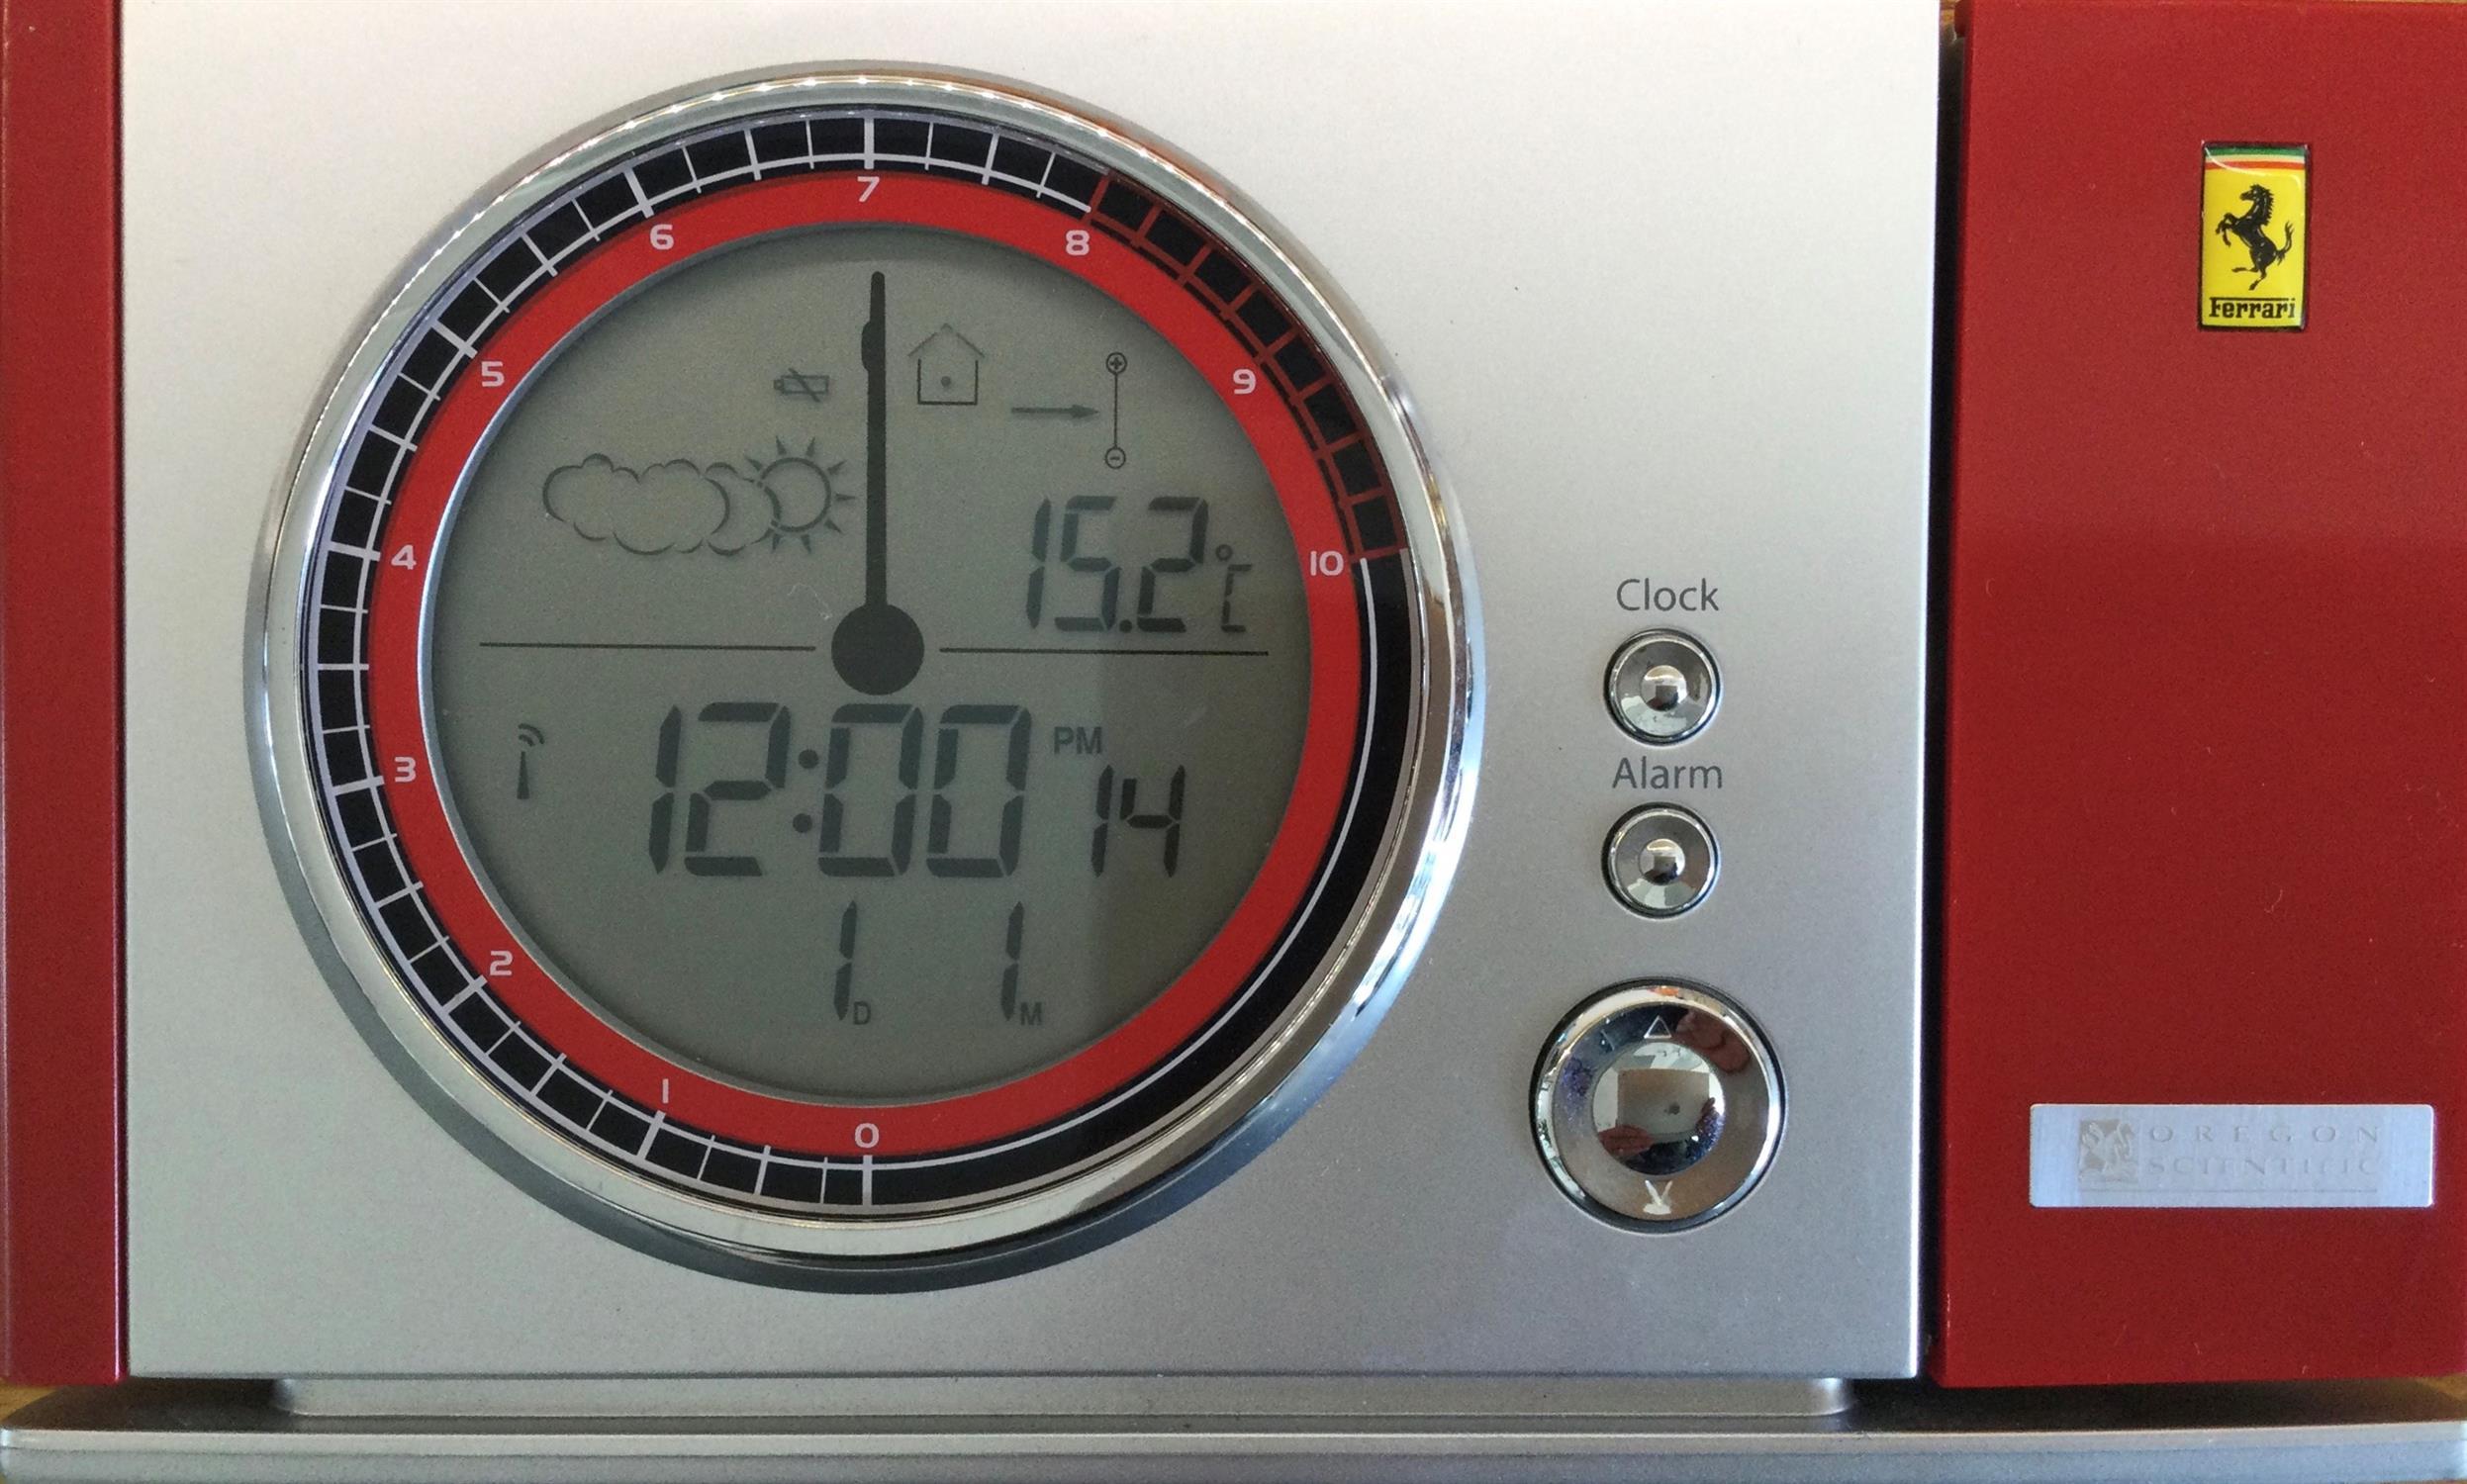 A Rare Maranello Ferrari-Badged Radio Controlled Projection Alarm Clock with Weather Forecast